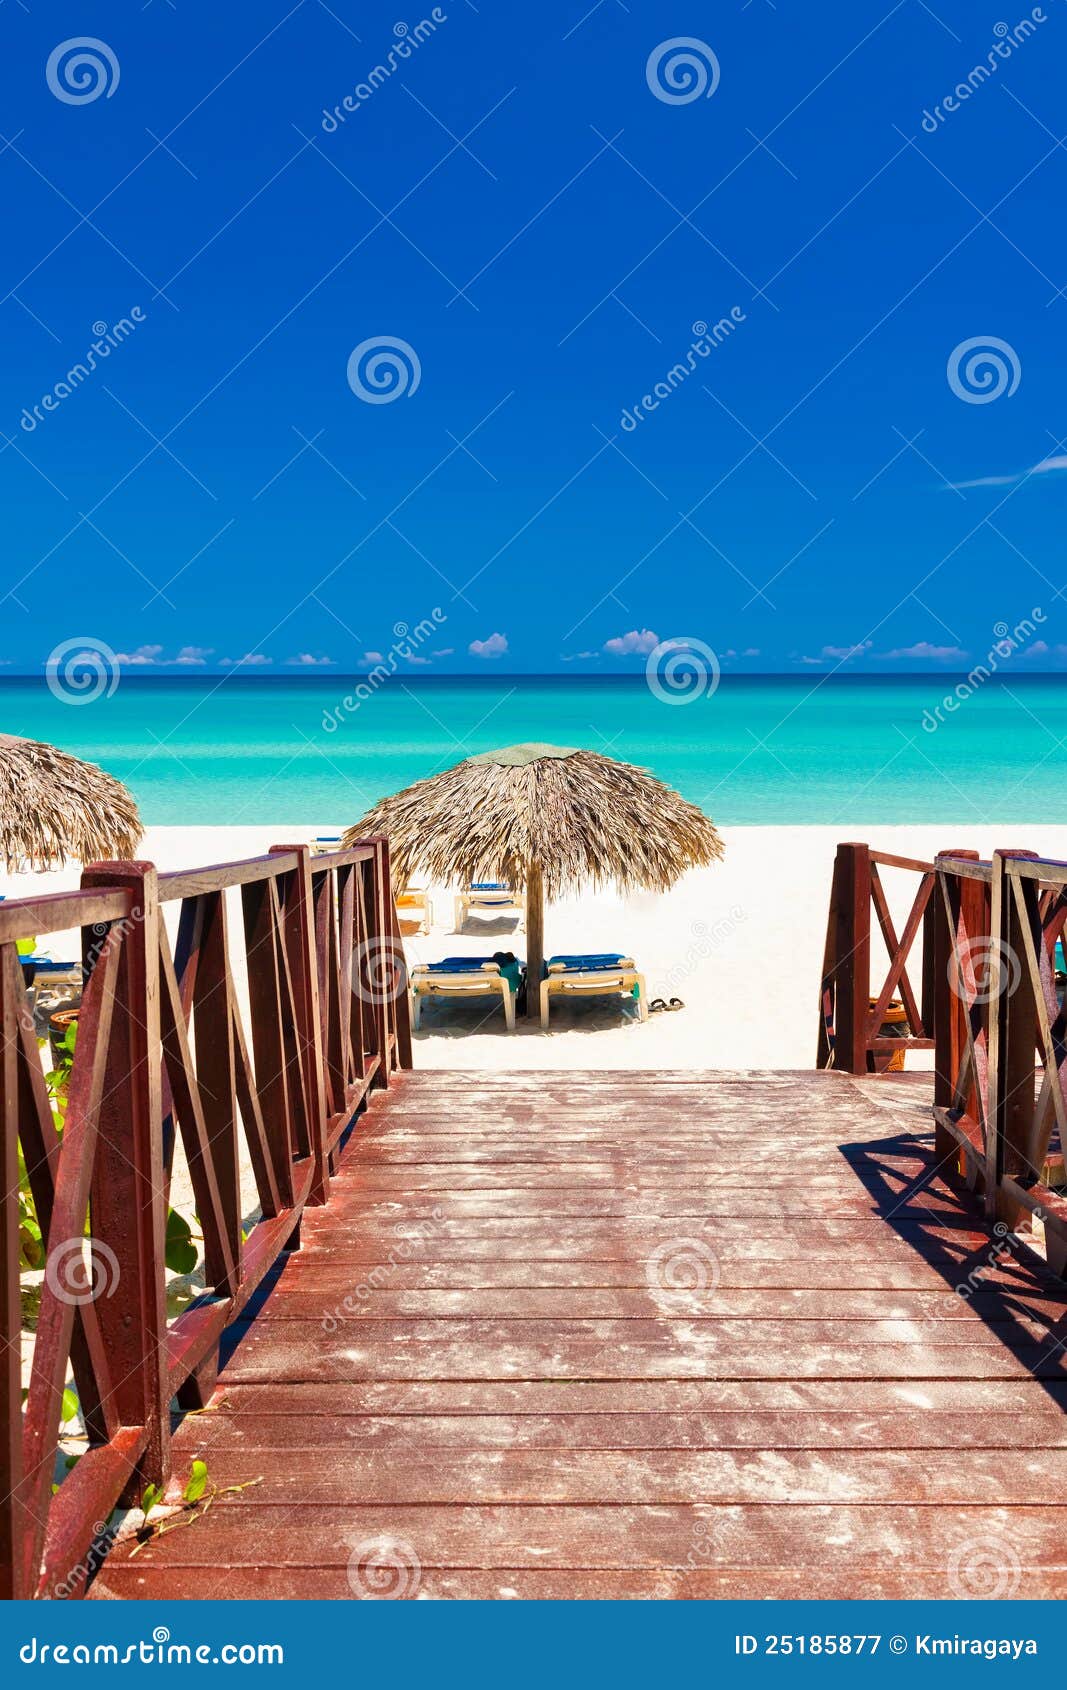 walkway leading to a tropical beach in cuba